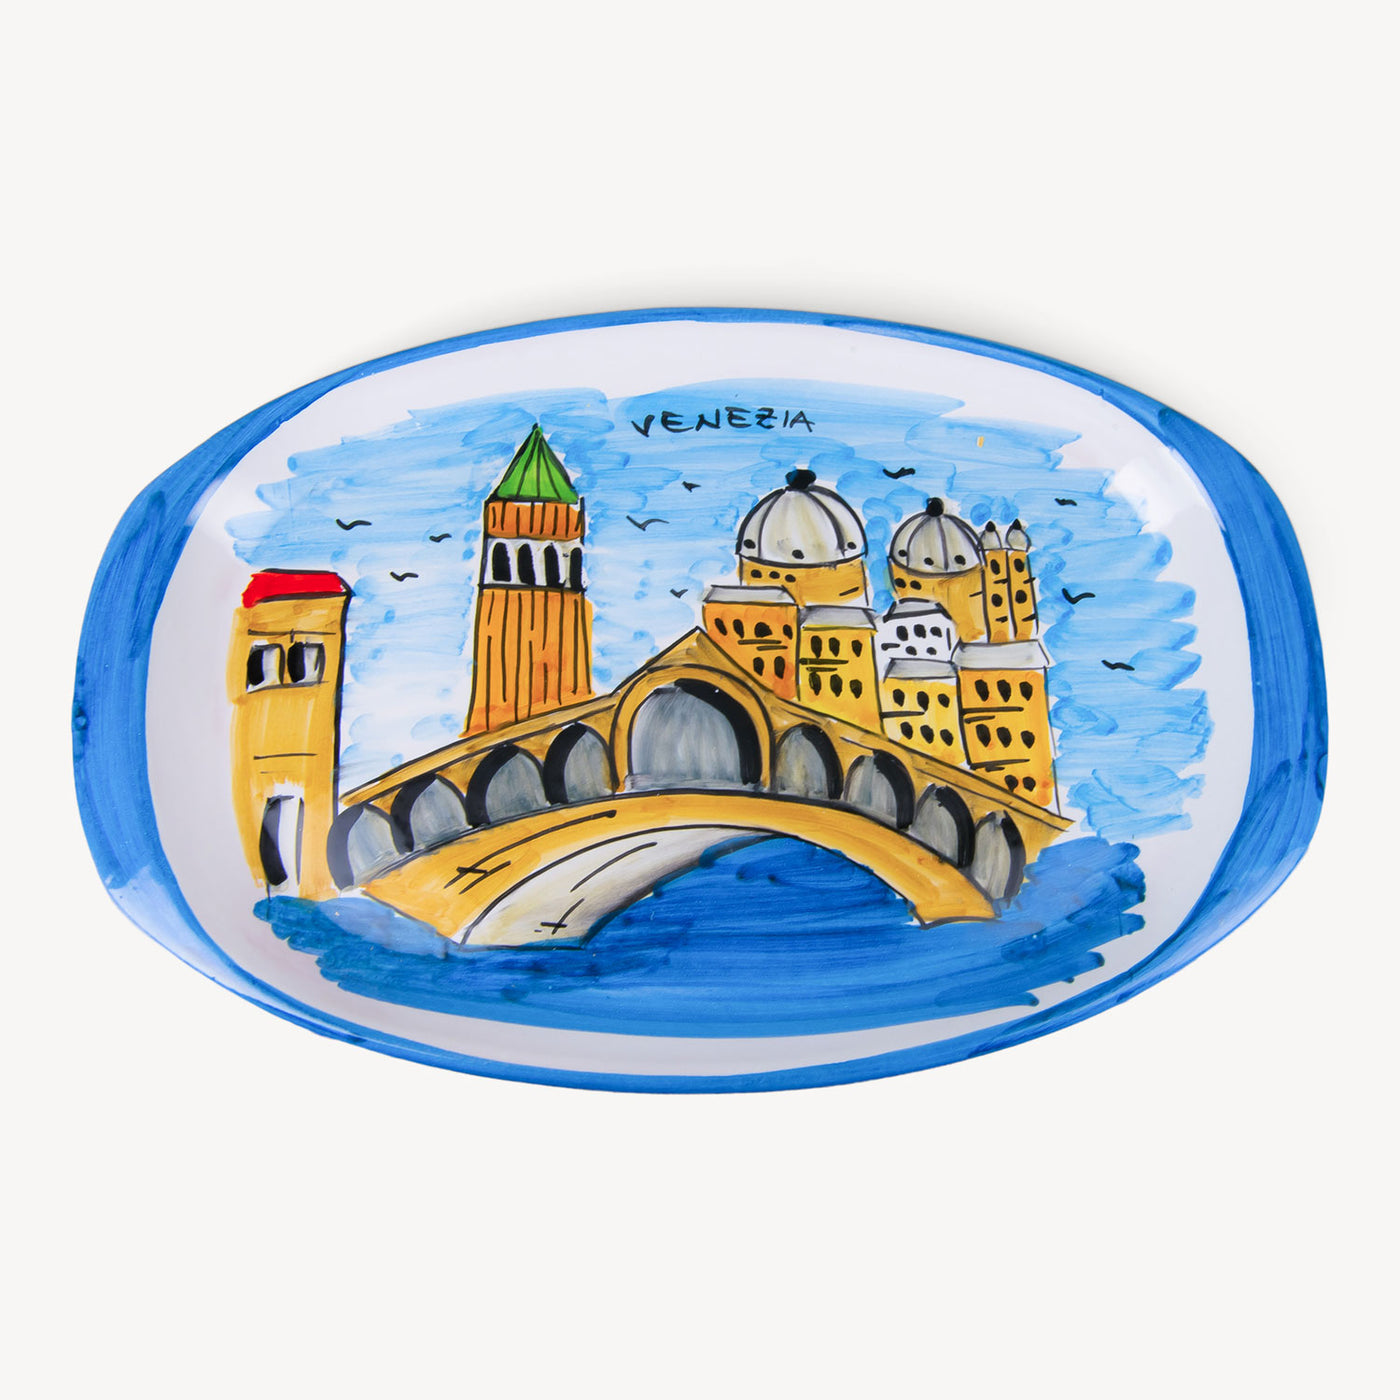 Memoritaly Handmade Painted Tray Venezia and Glasses City Set (6 pcs of glass)